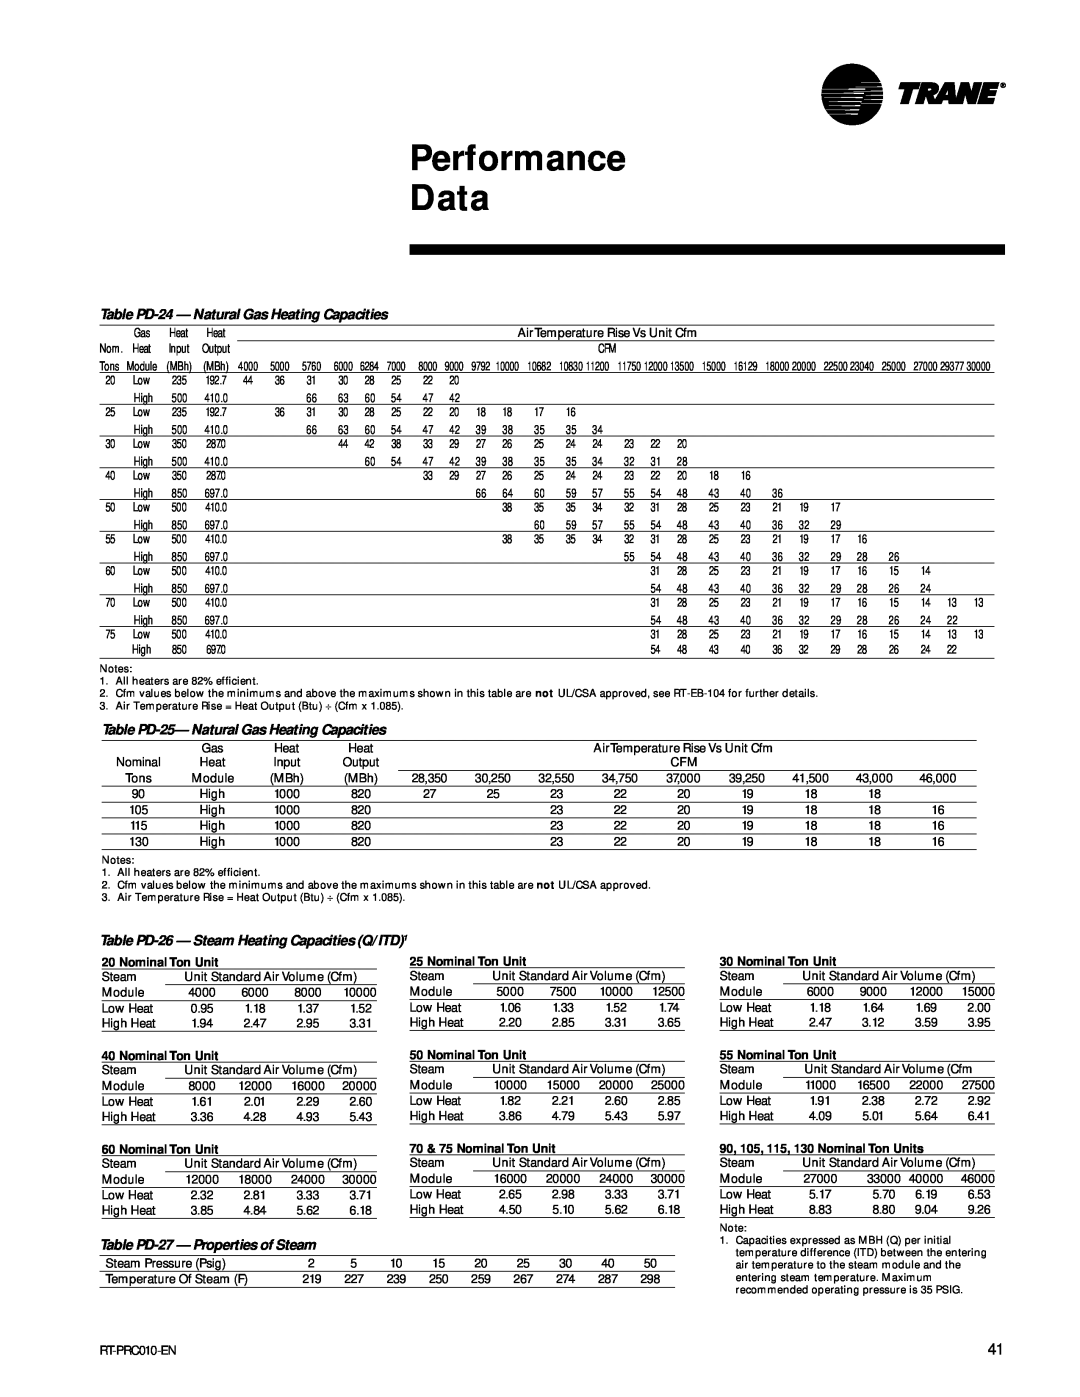 Trane RT-PRC010-EN manual Performance Data, 70 & 75 Nominal Ton Unit, 90, 105, 115, 130 Nominal Ton Units 